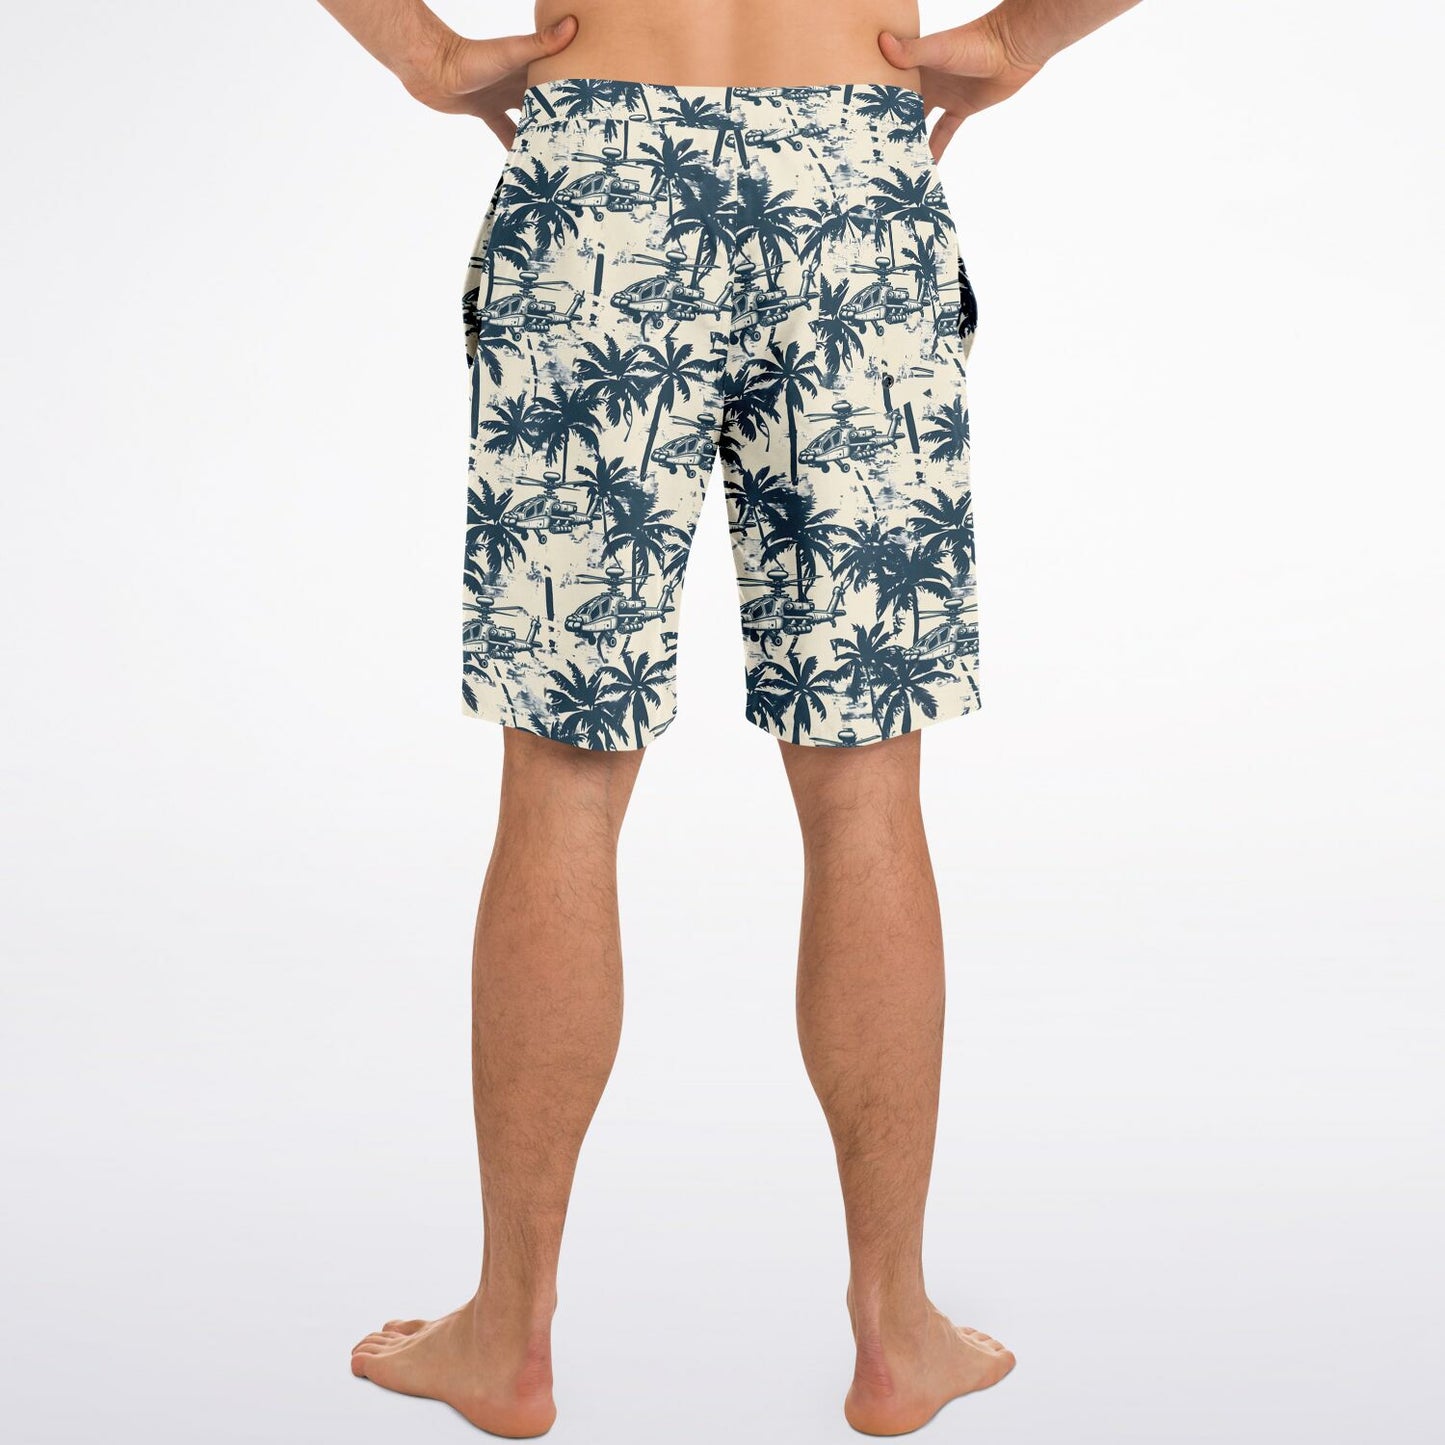 Aloha Attack Board Shorts with Palm trees